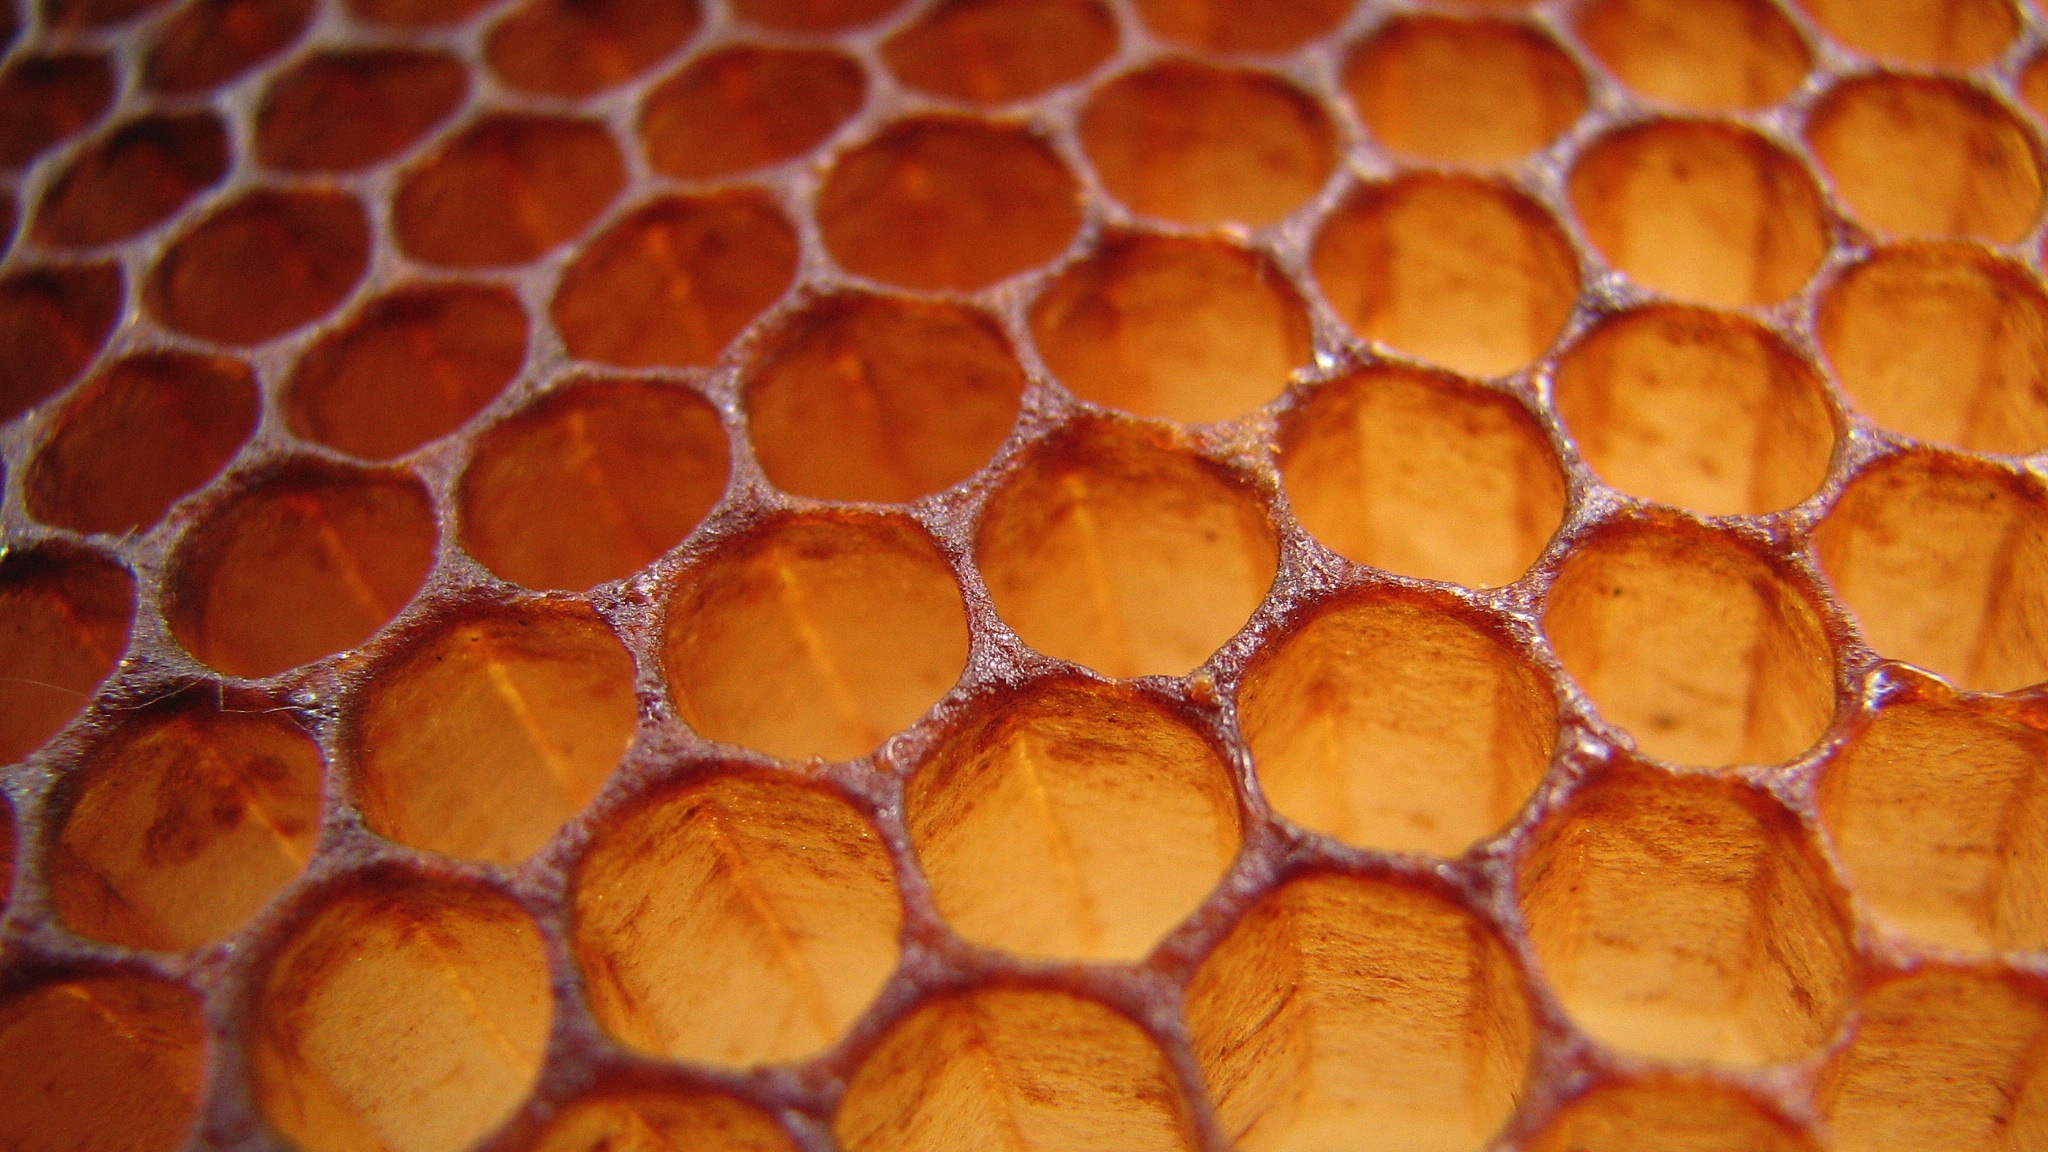 The Honeycombs